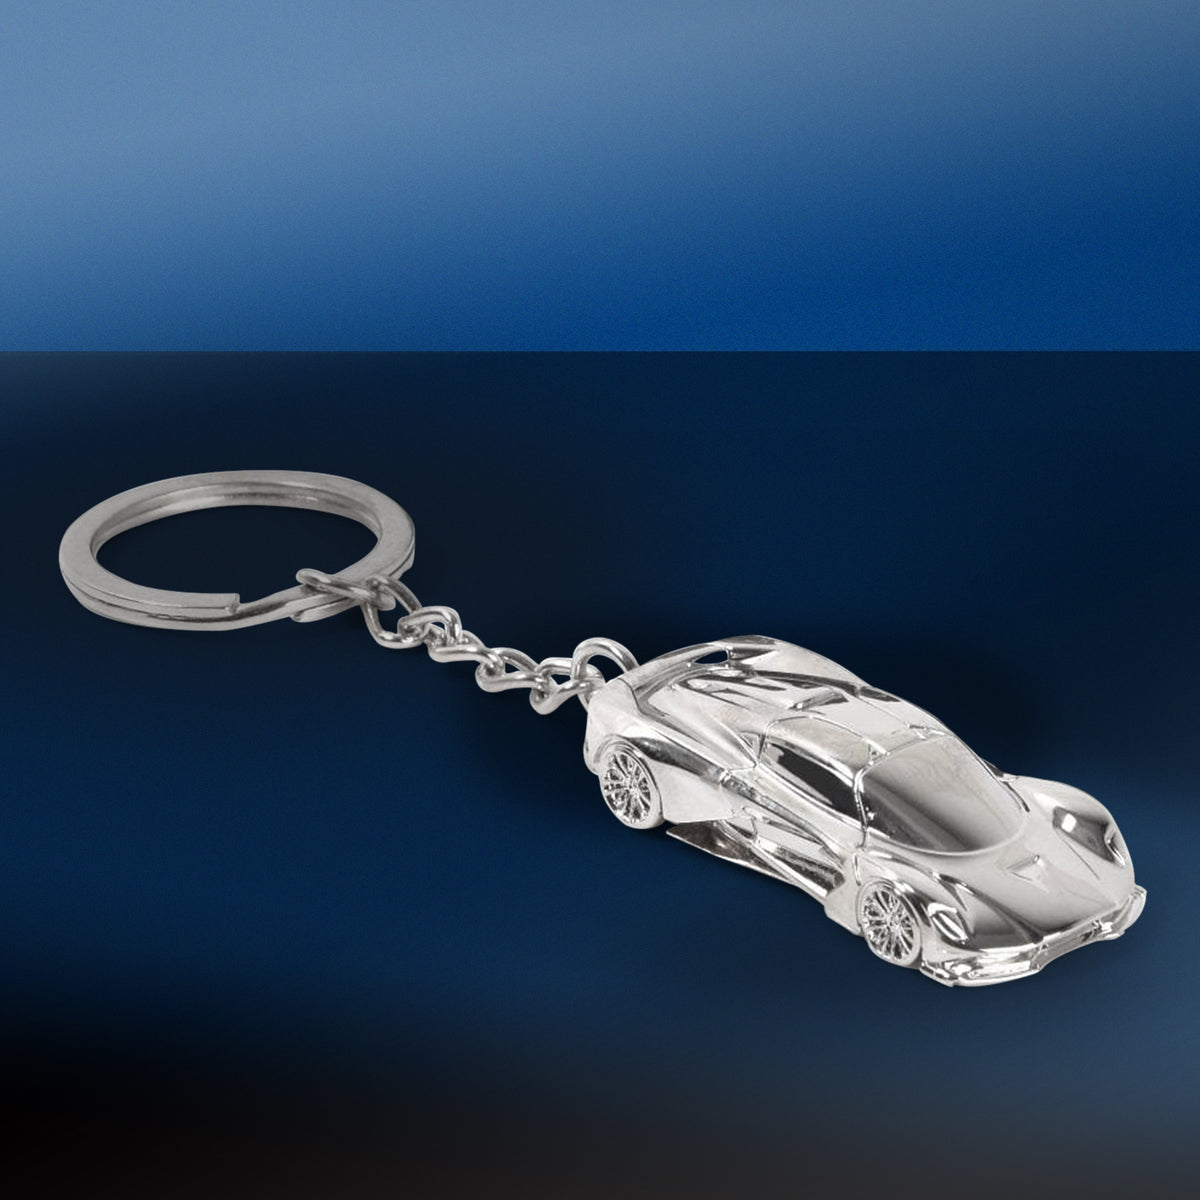 James Bond Aston Martin Valhalla Car Keyring - No Time To Die Edition